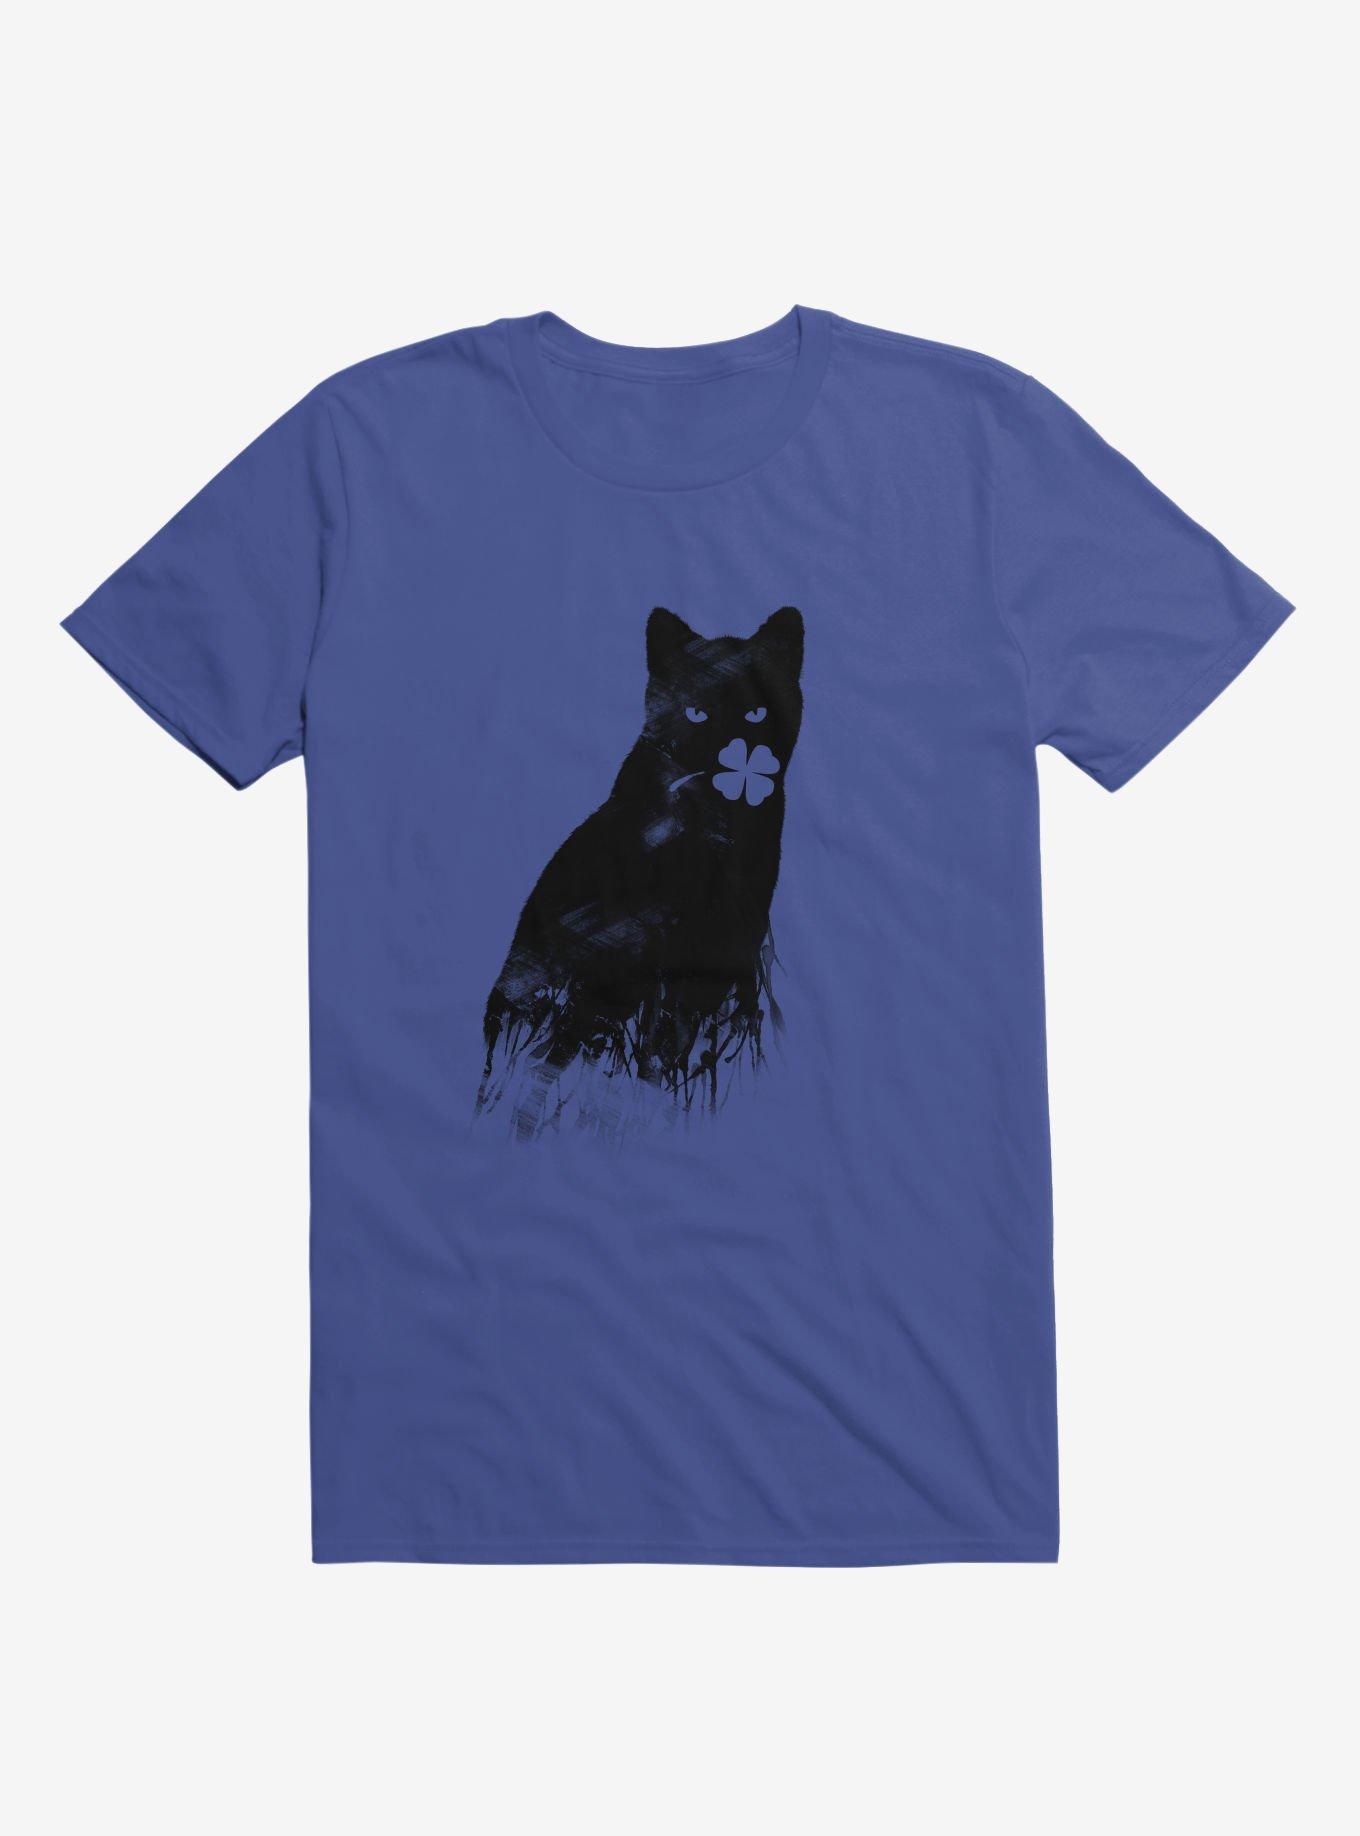 Ambivalence Cat & Clover Royal Blue T-Shirt